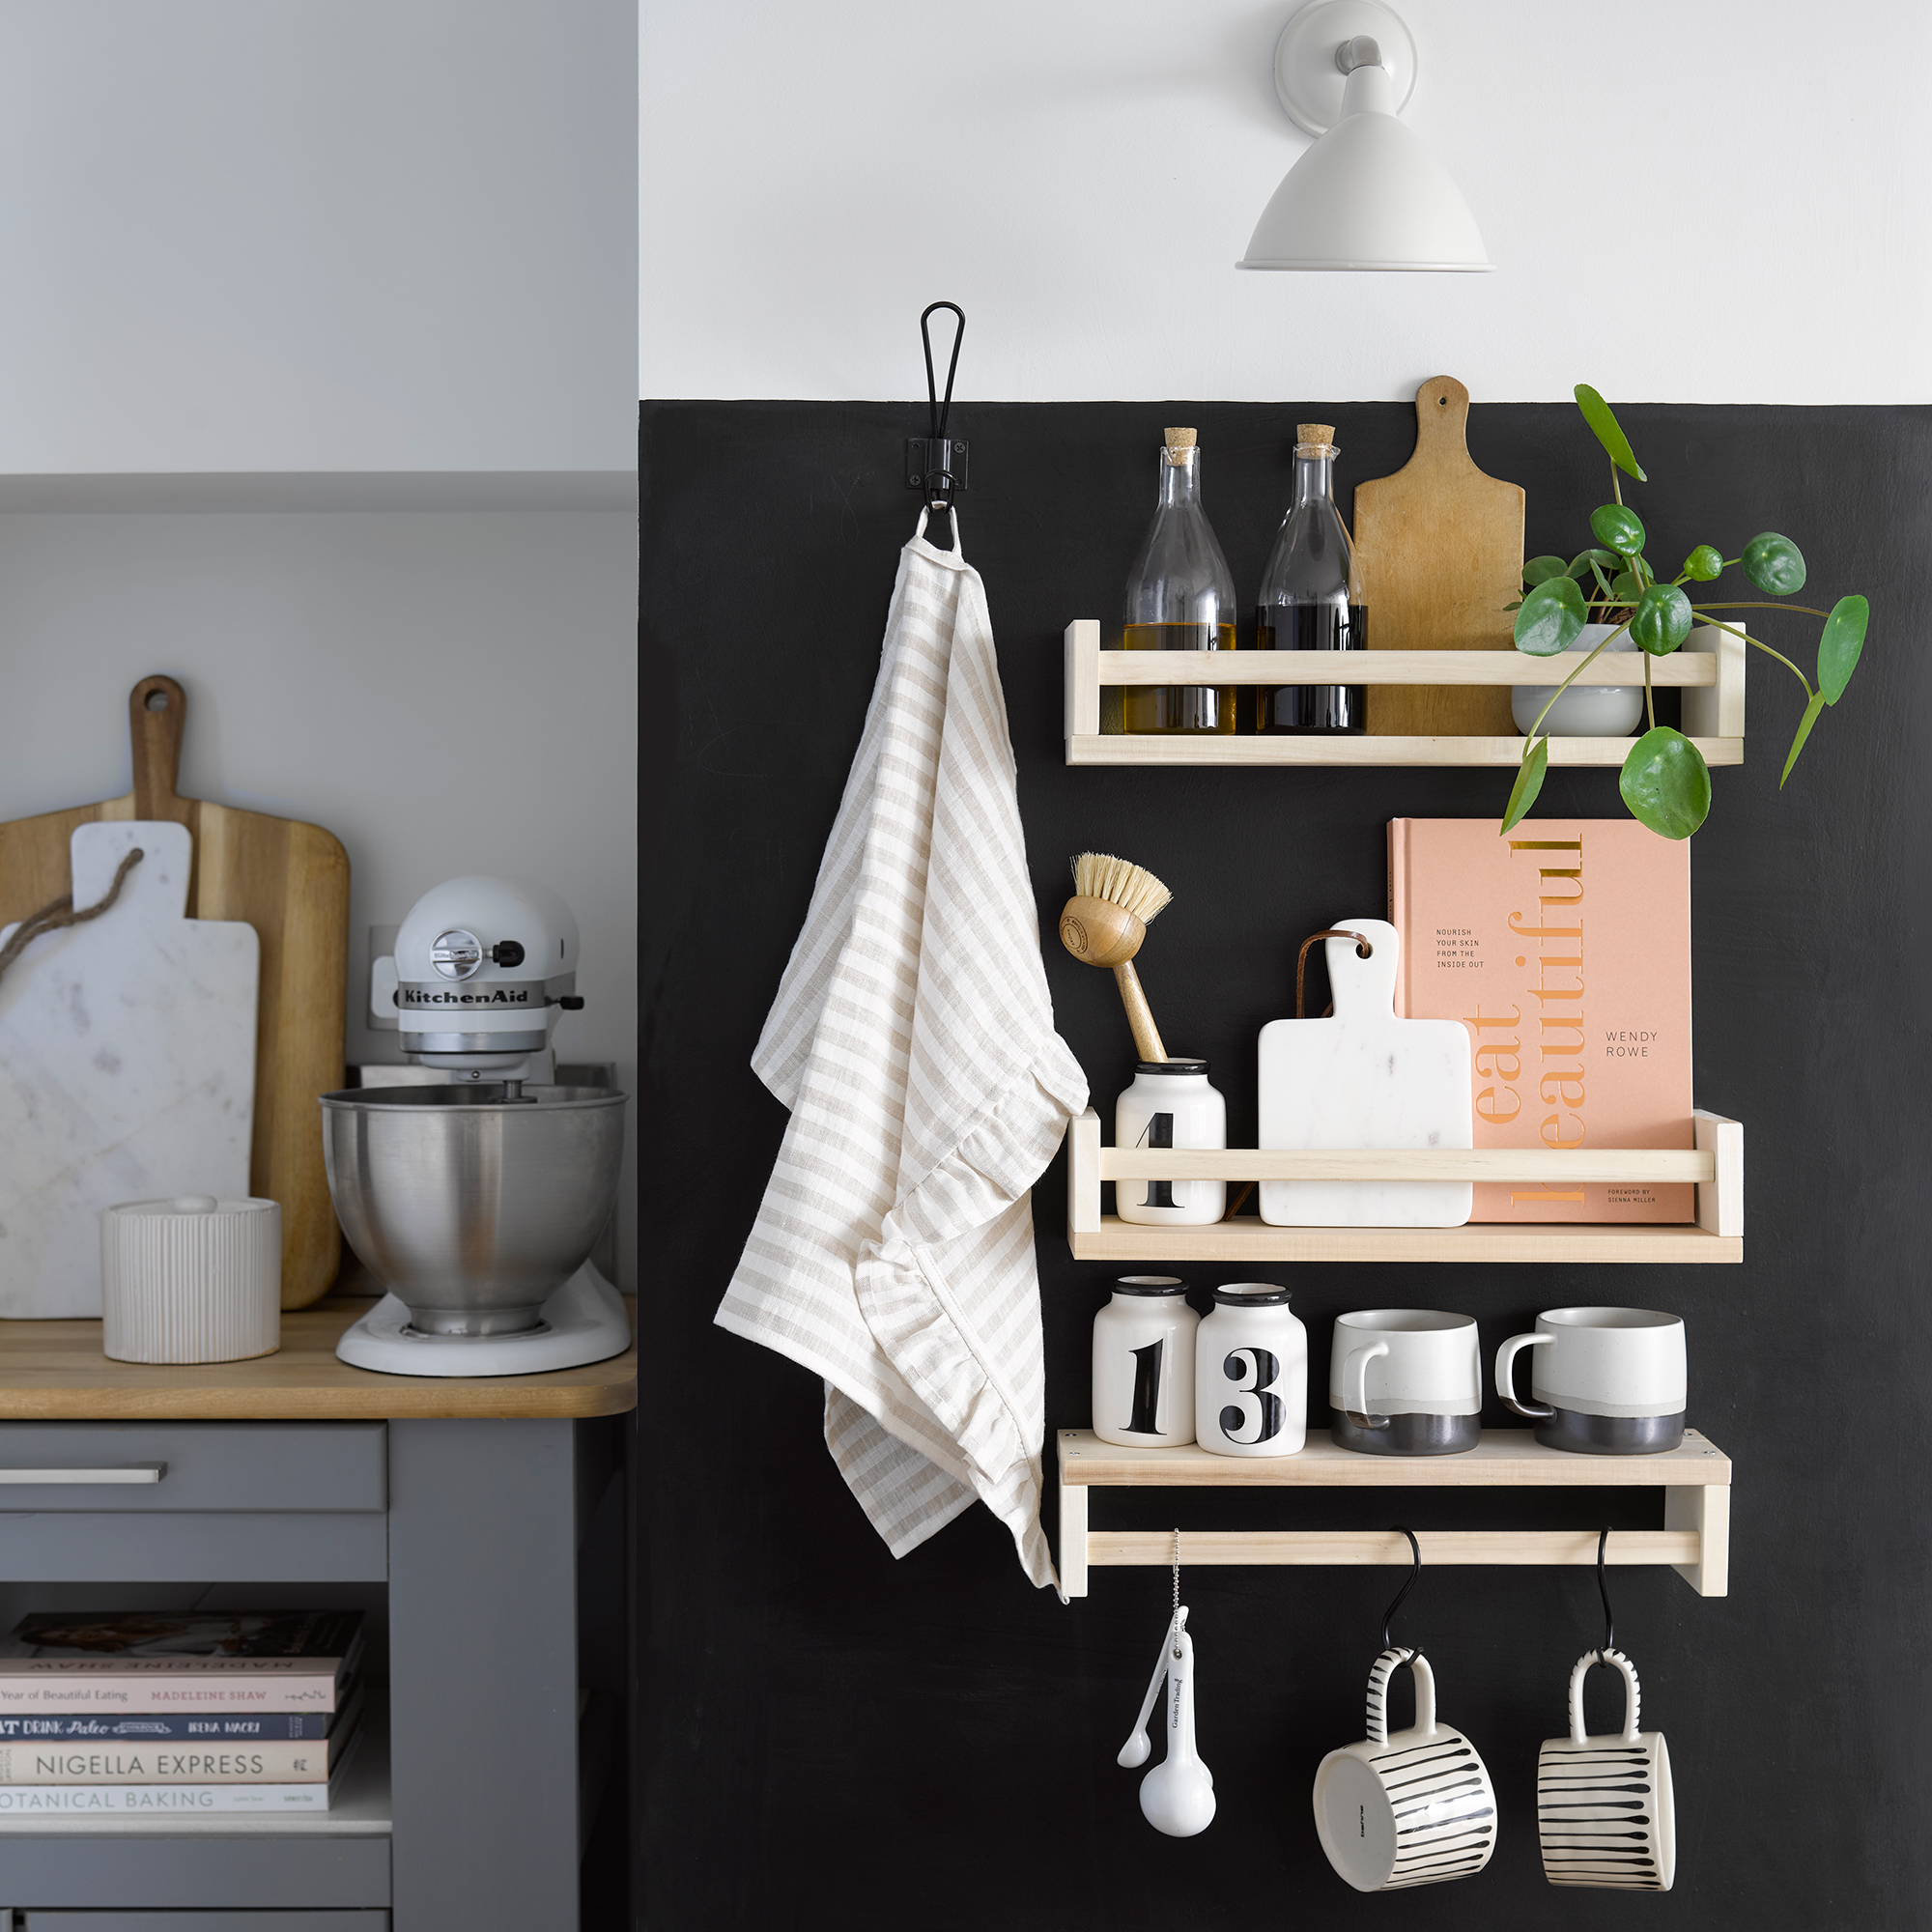 DIY IKEA SPICE RACK ORGANIZATION  Kitchen Storage Ideas & Hacks